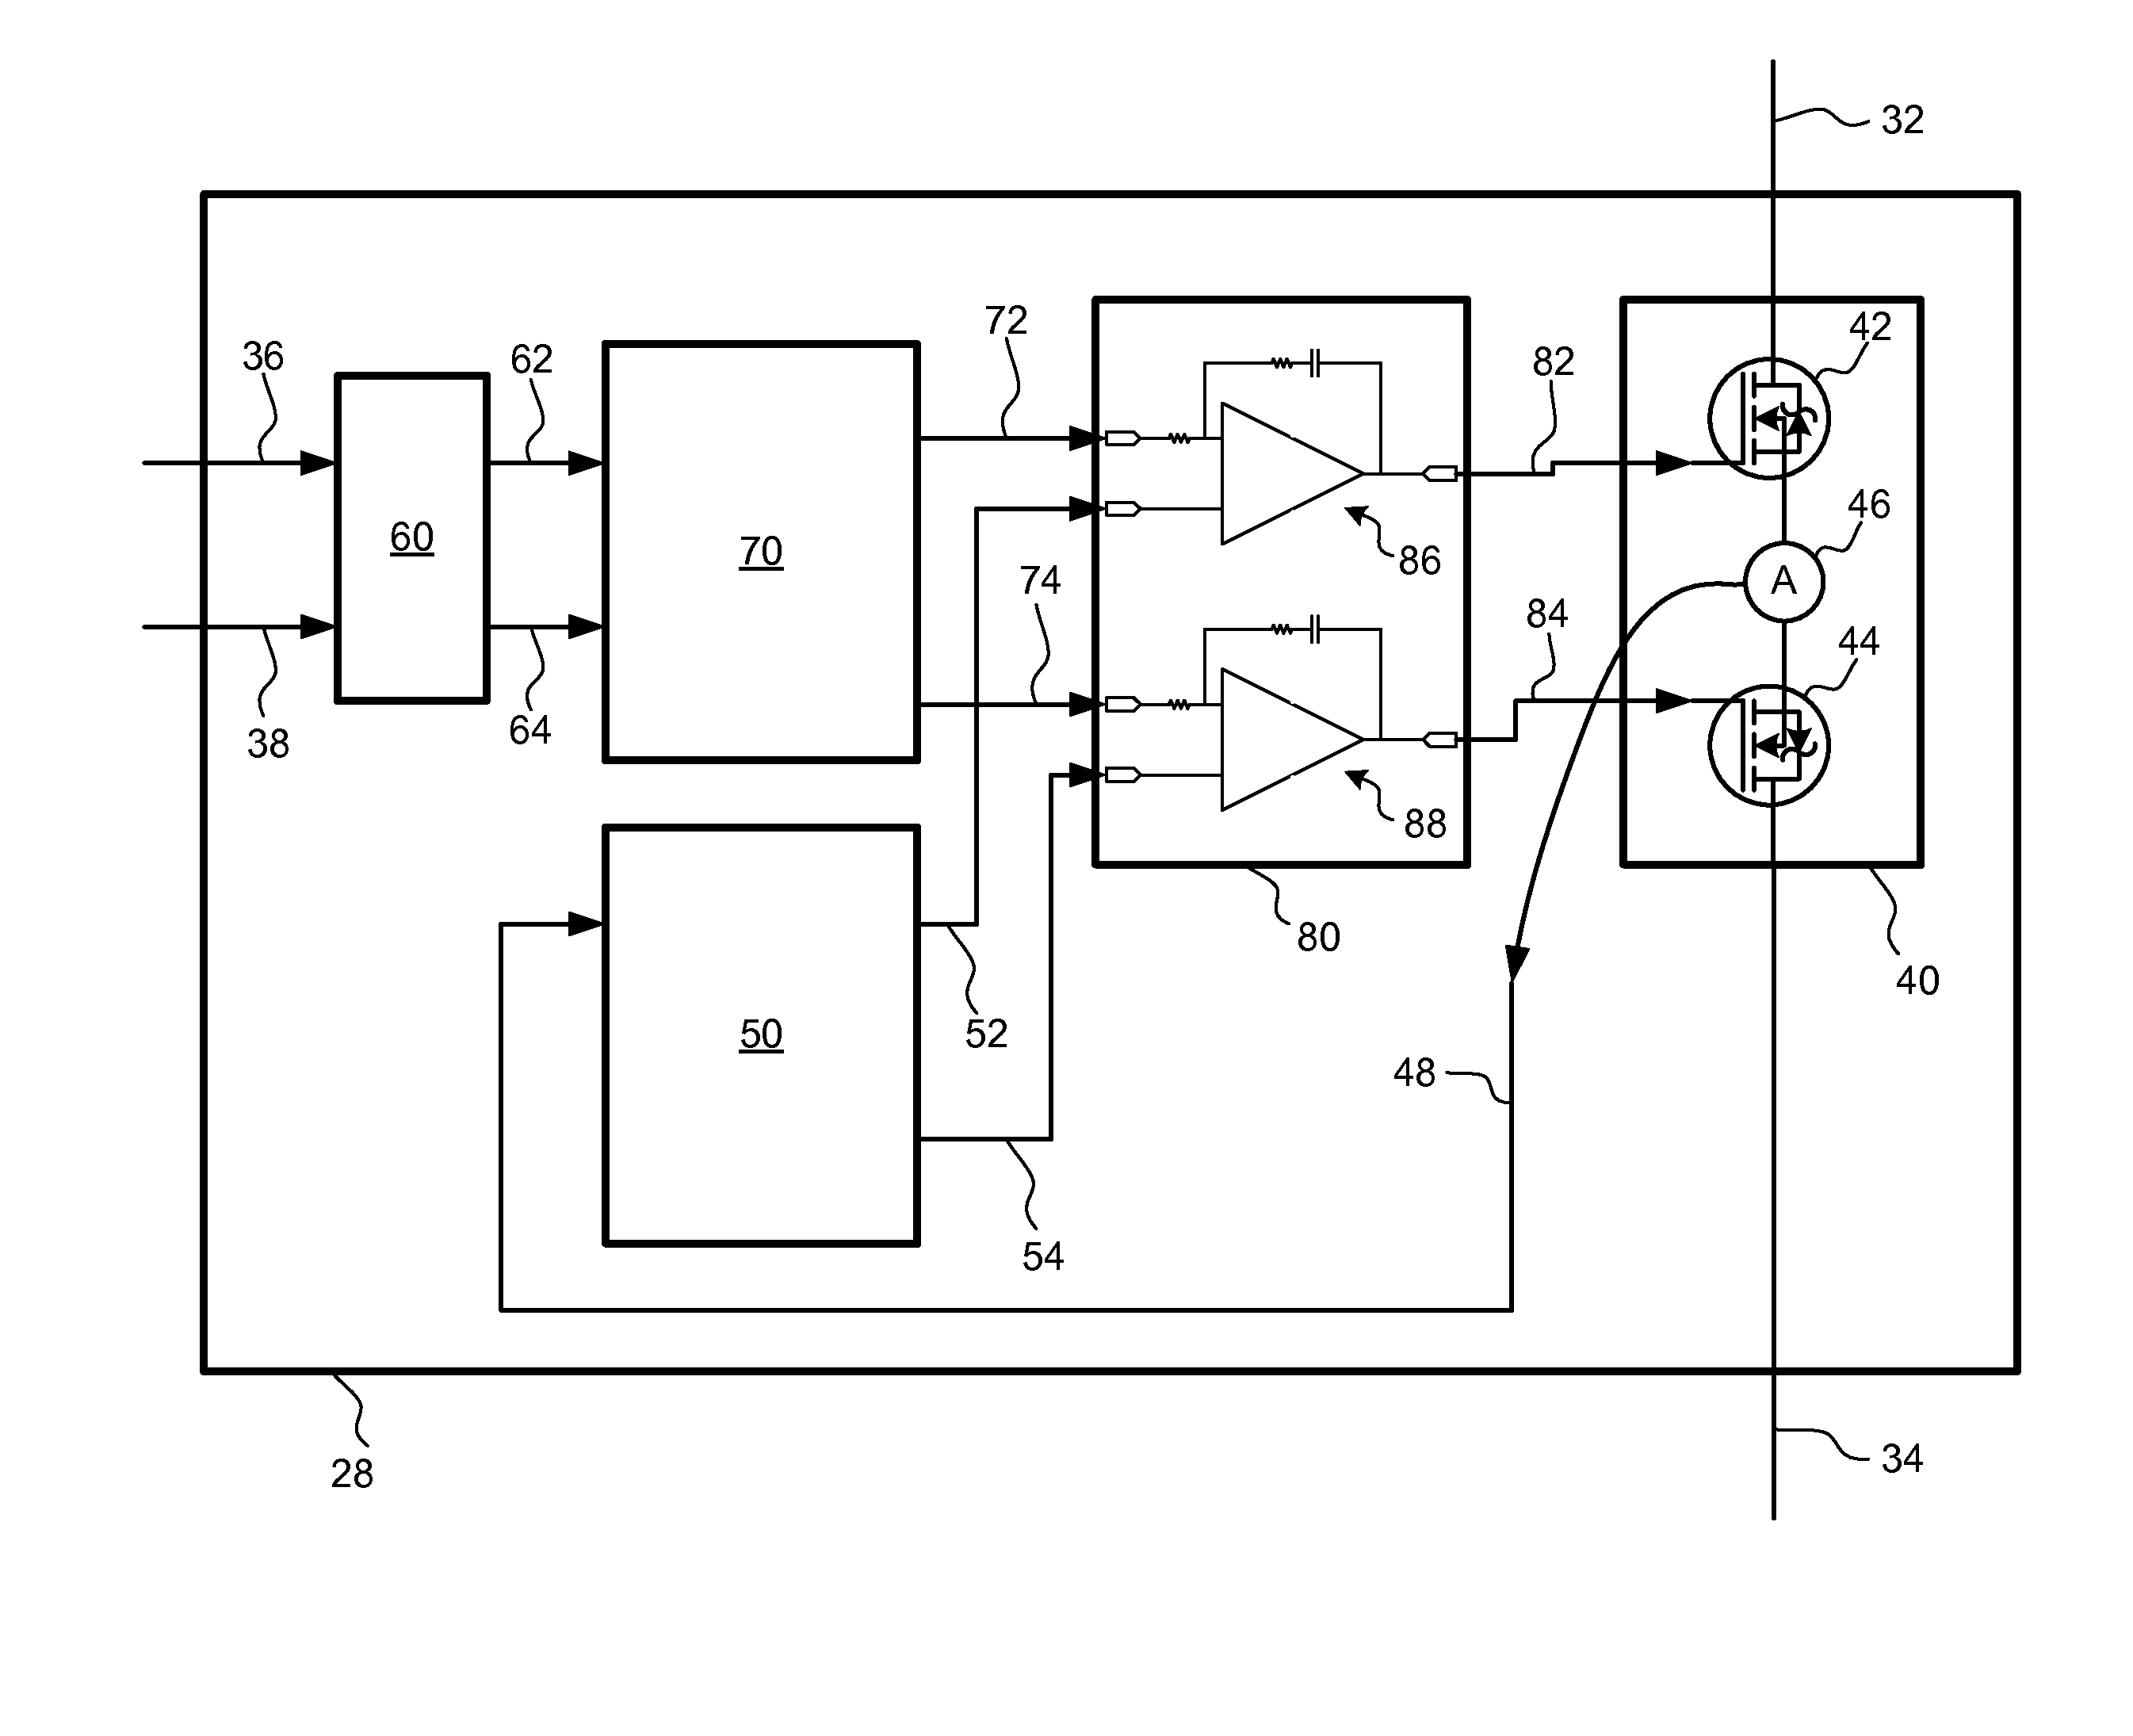 Battery parallel balancing circuit